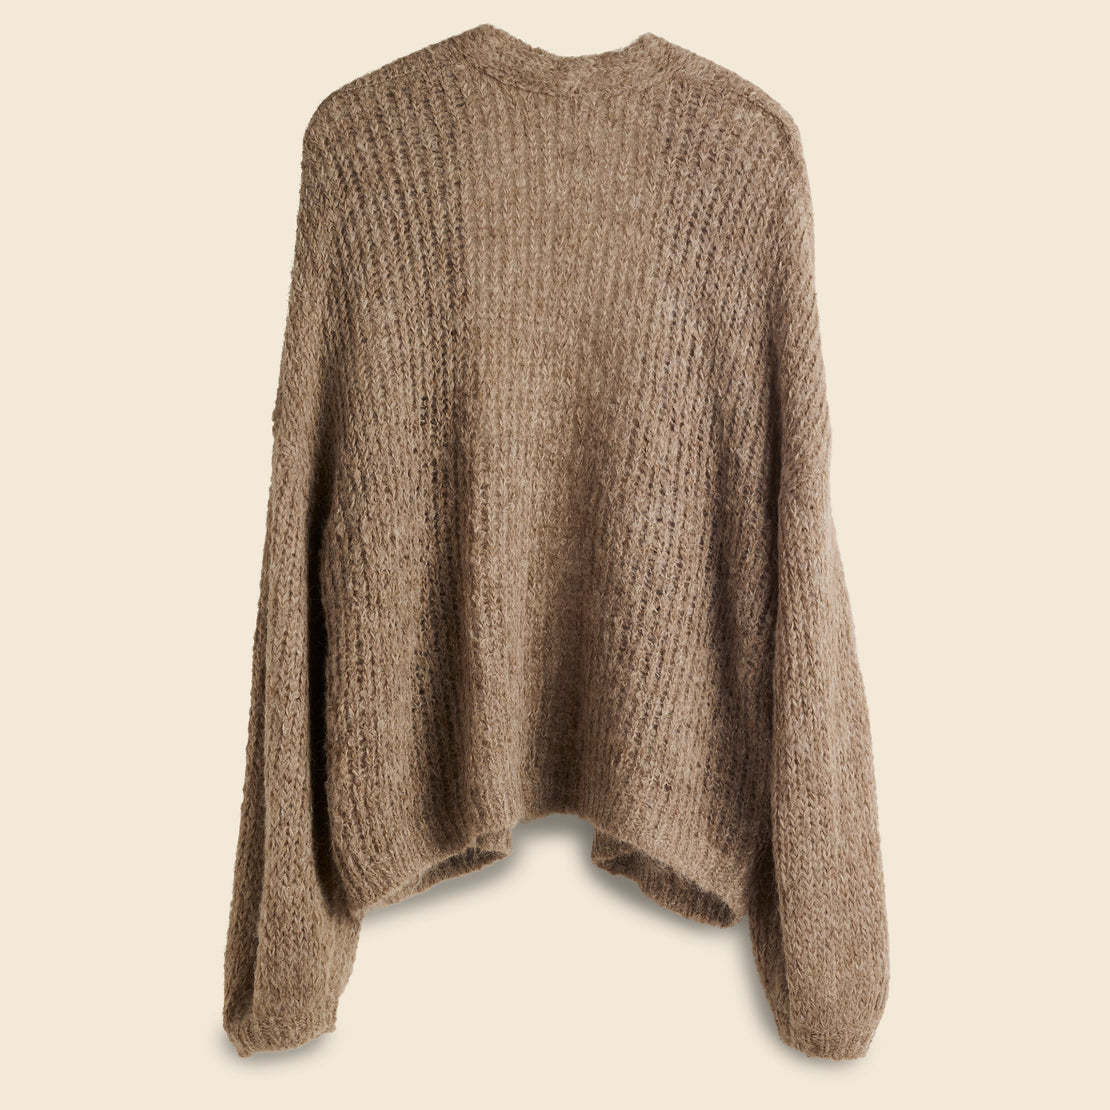 Cora Cardigan - Cedar - Atelier Delphine - STAG Provisions - W - Tops - Sweater